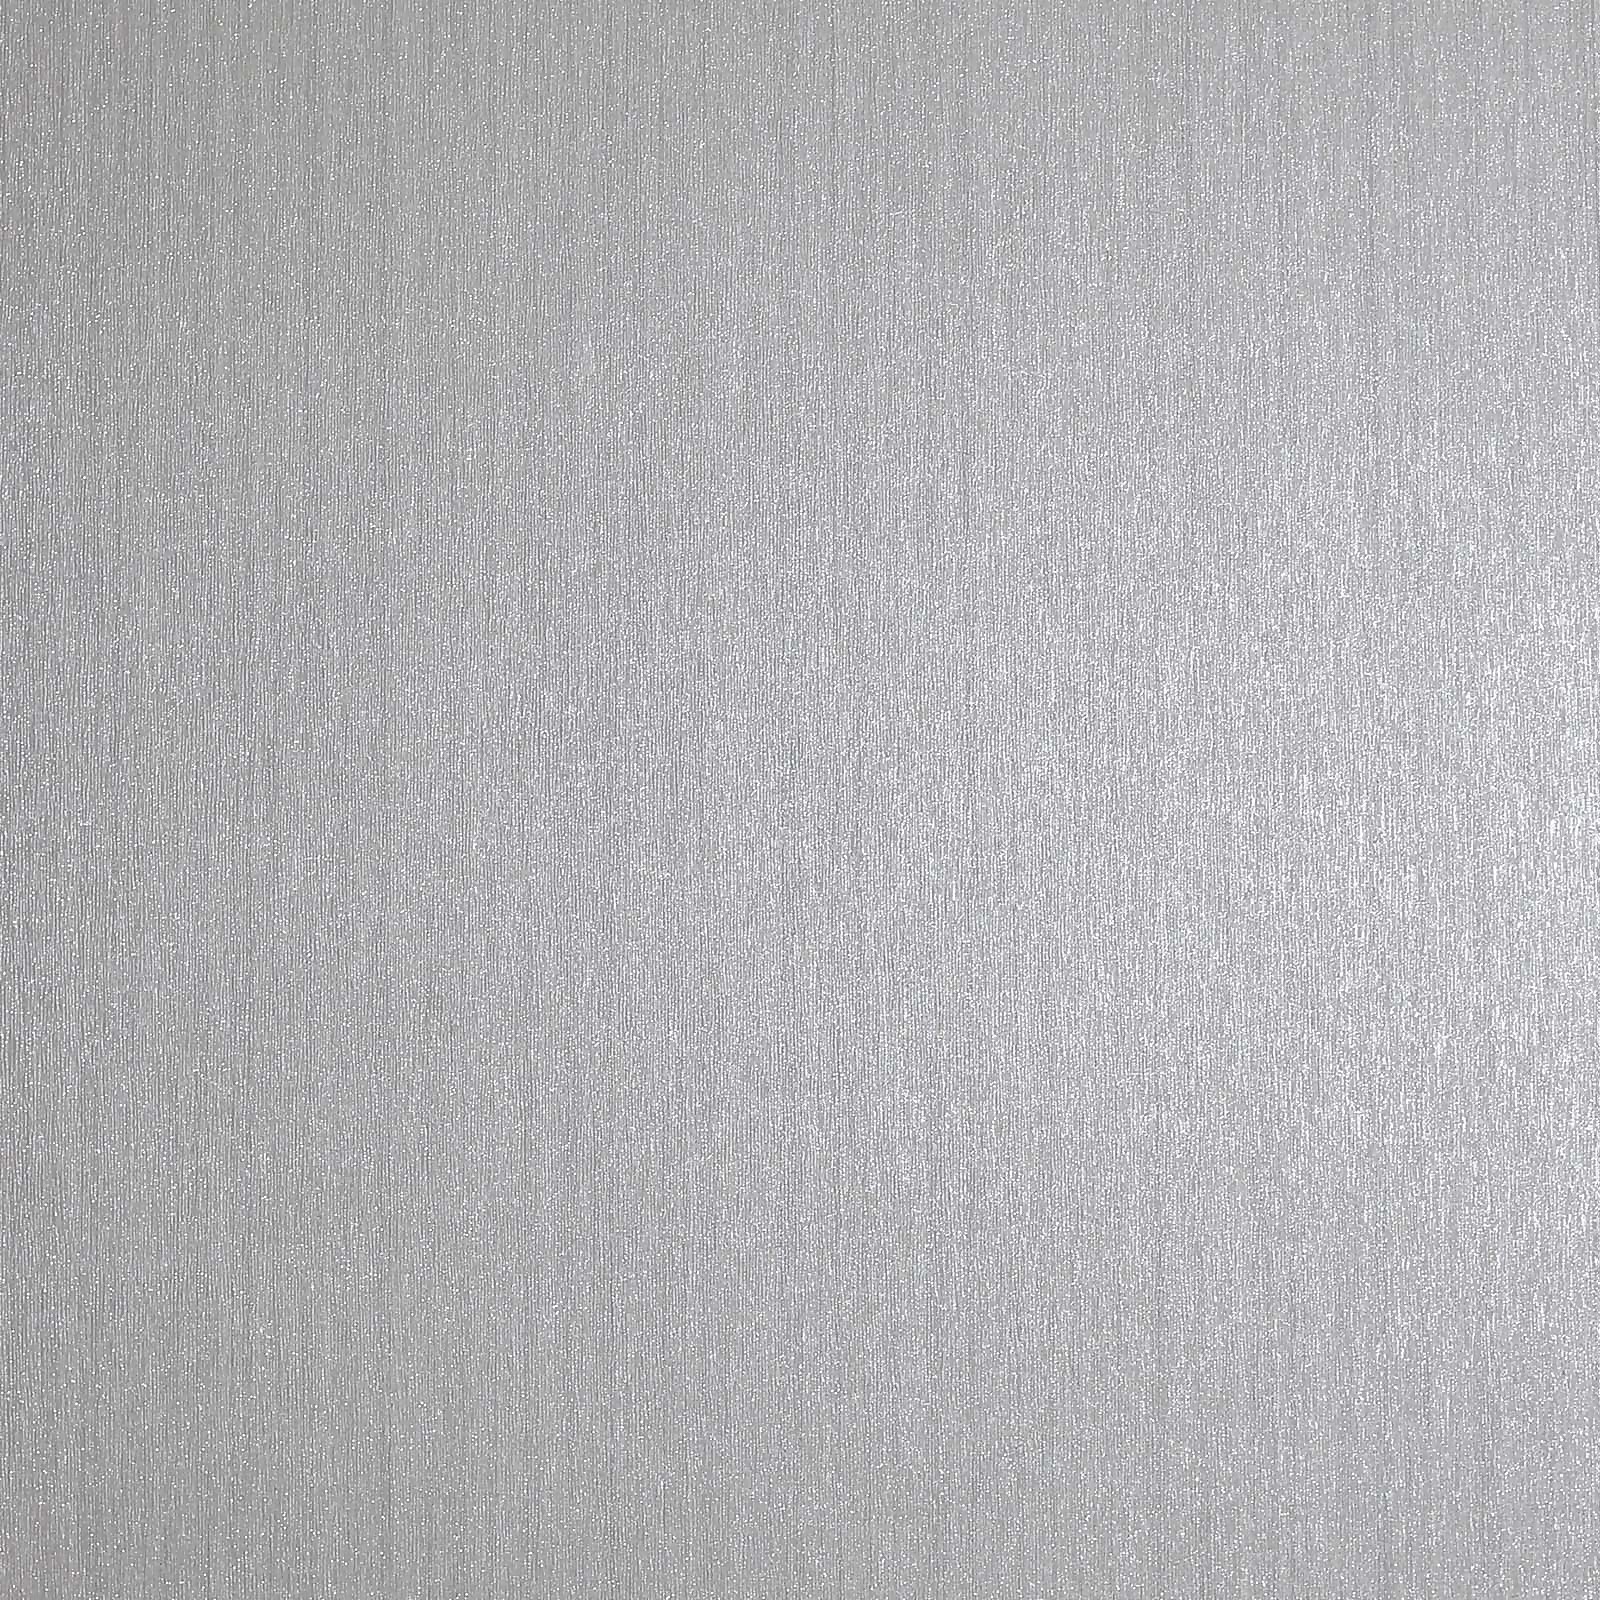 Photo of Arthouse Diamond Plain Textured Metallic Glitter Silver Wallpaper Large Sample